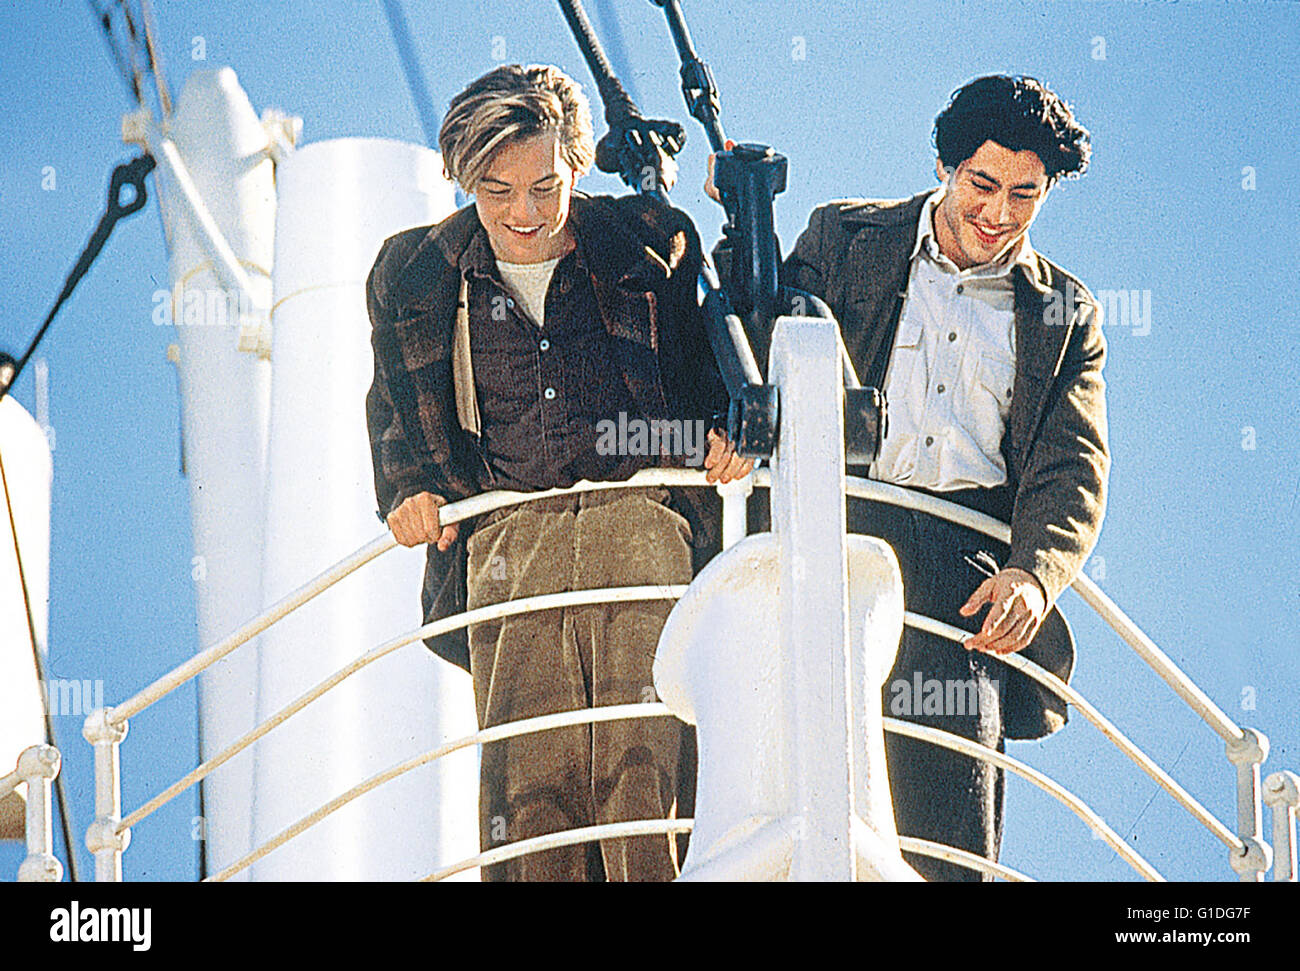 Titanic / Leonardo DiCaprio / Danny Nucci Stock Photo - Alamy